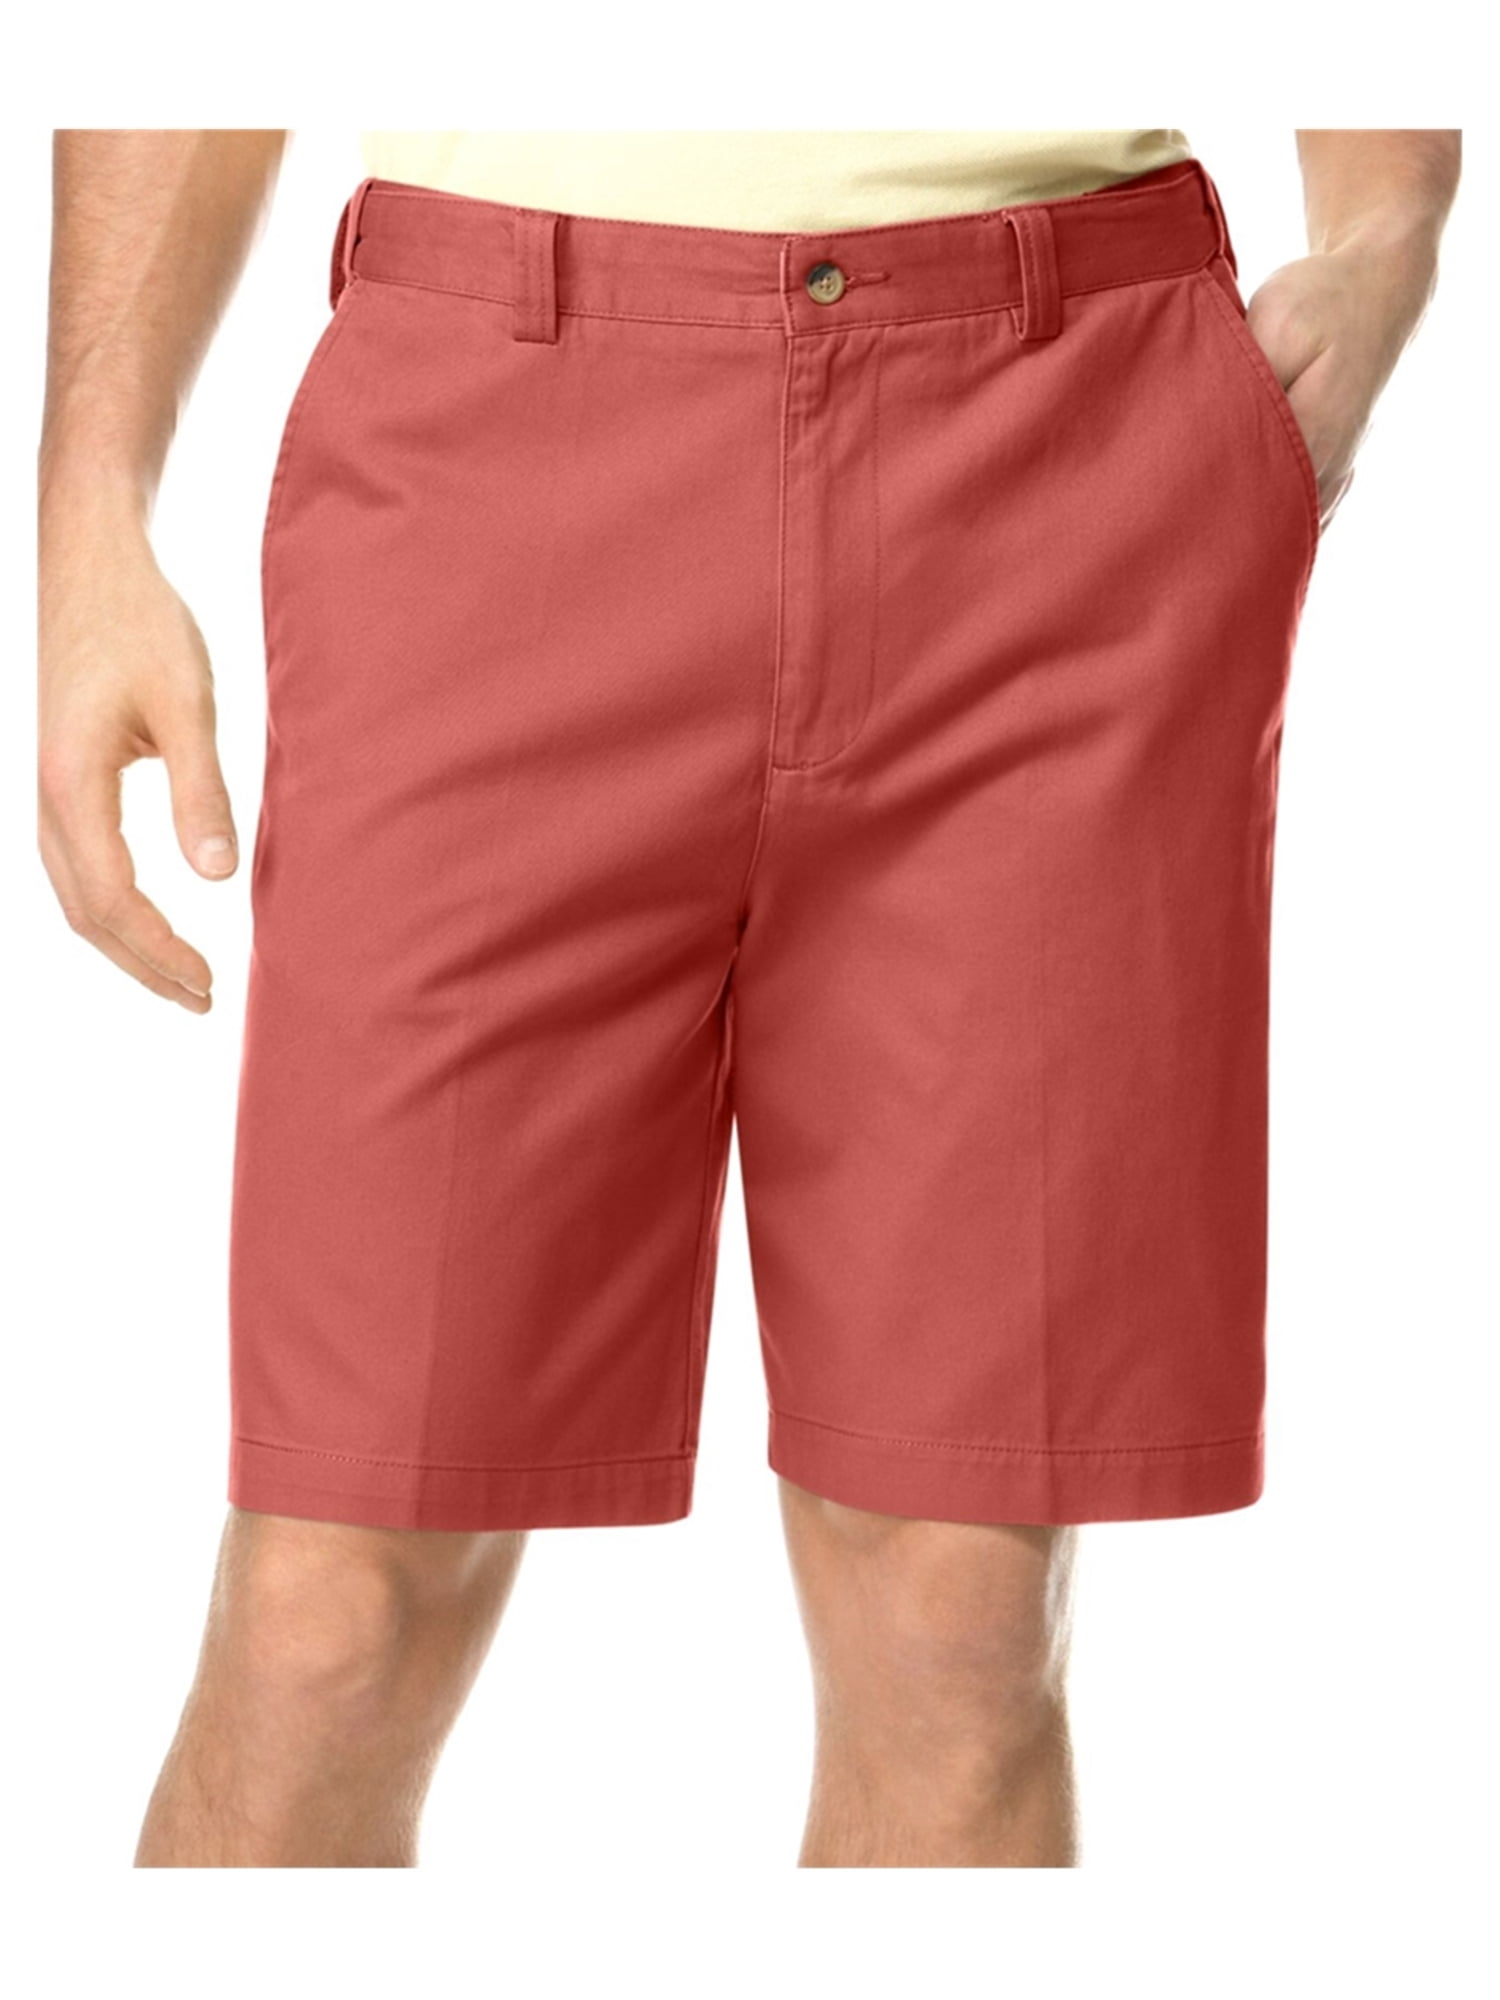 geoffrey beene cargo shorts extender waist